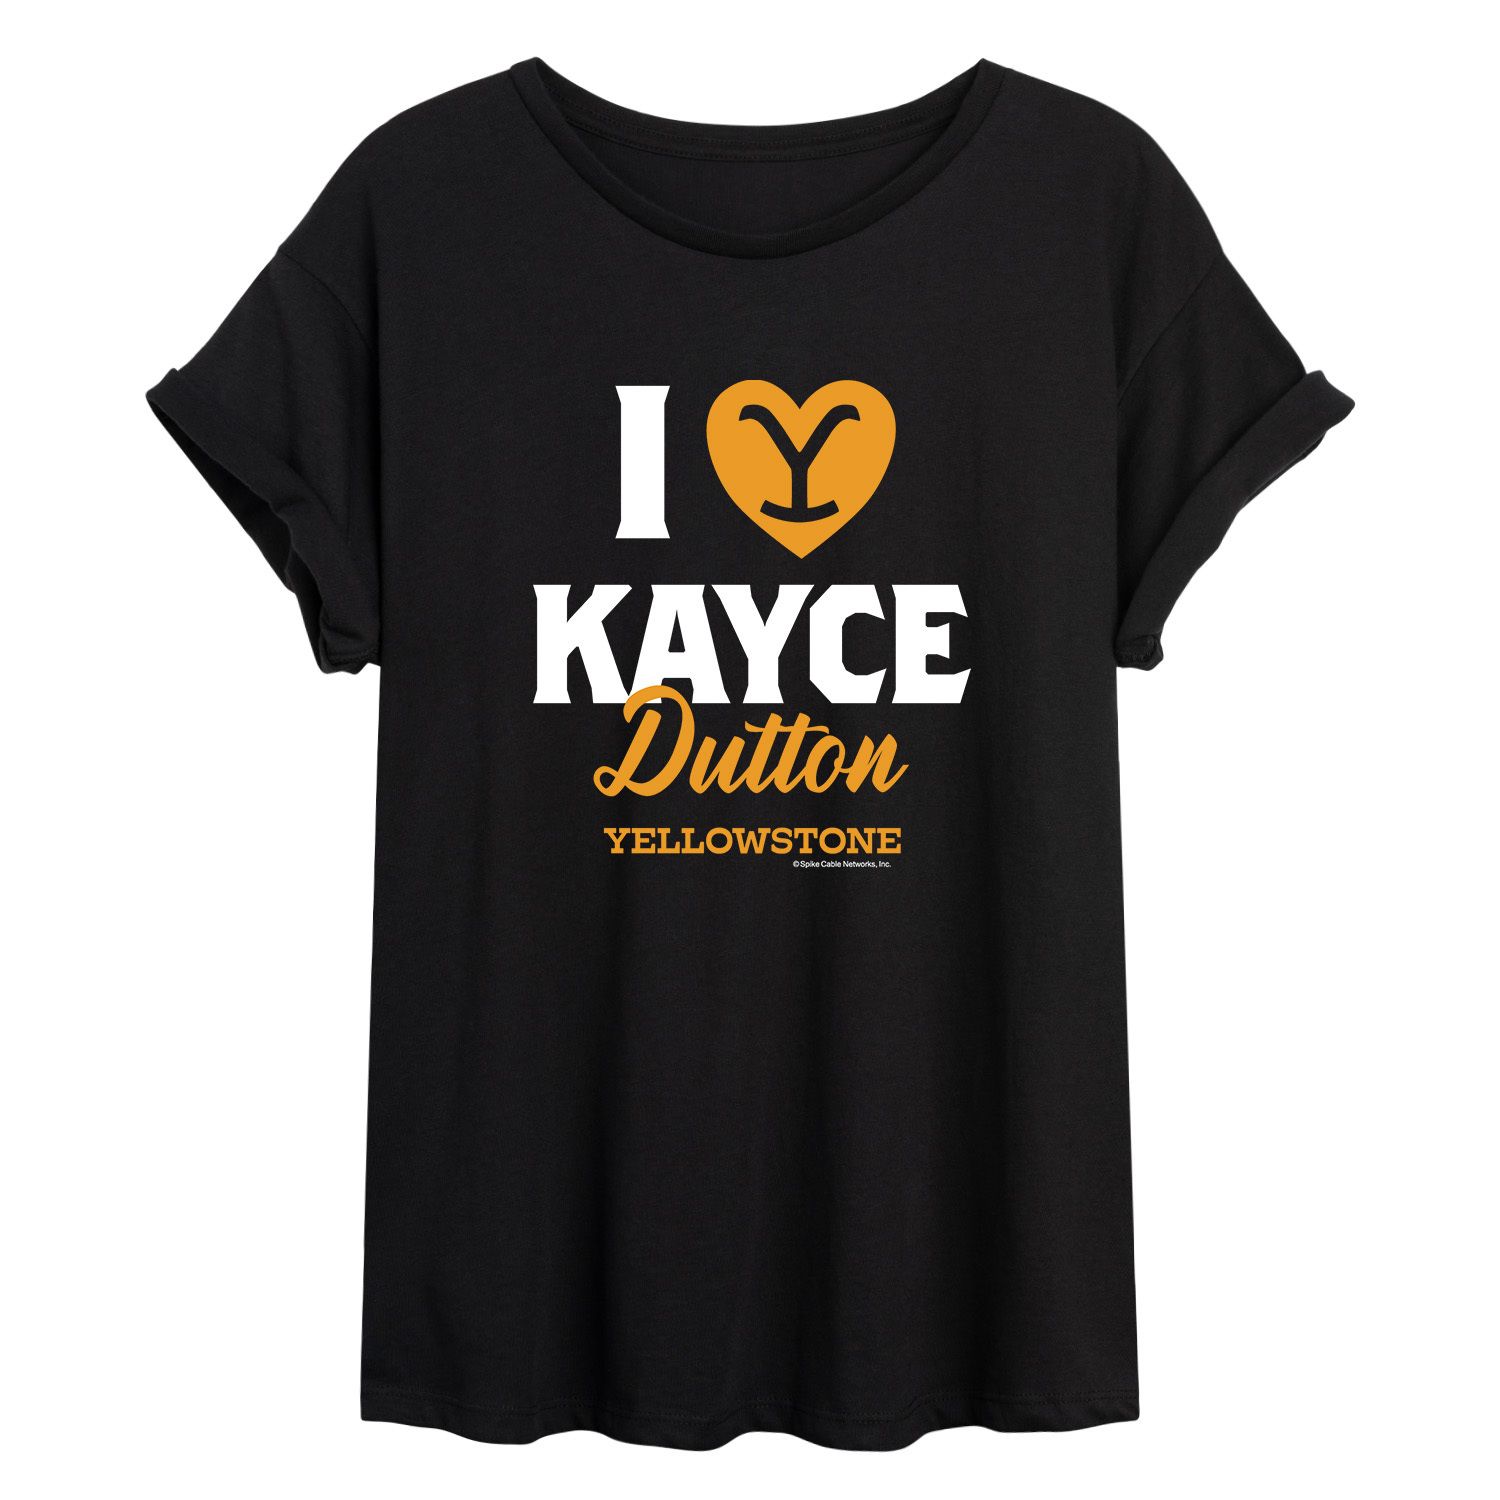 Юниорская футболка Yellowstone Kayce с струящимся рисунком Licensed Character